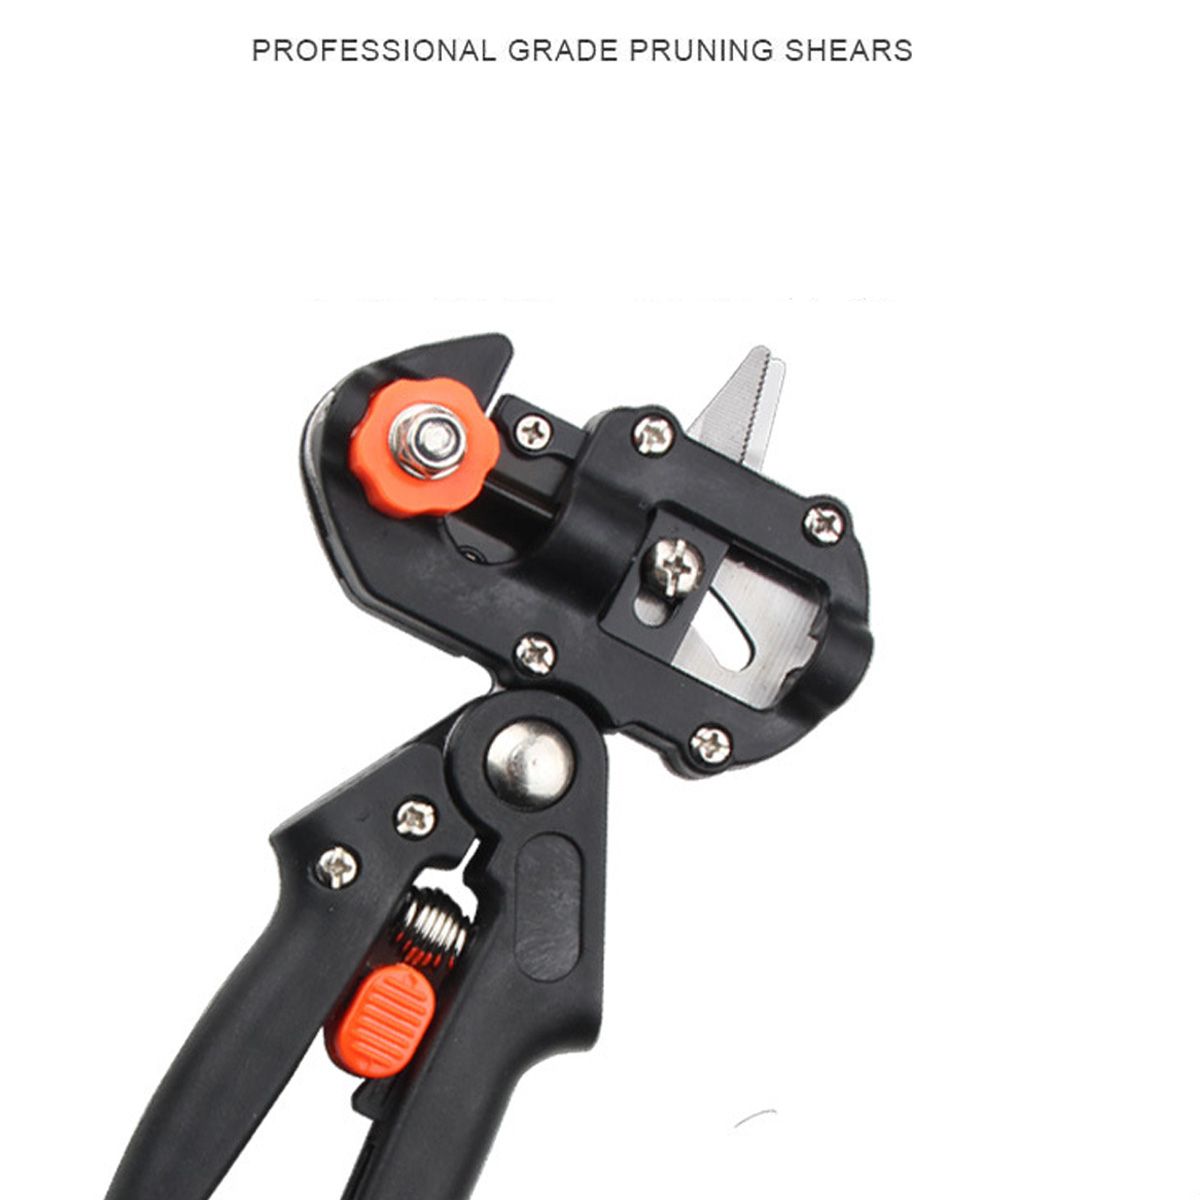 10mm-Garden-Grafting-Tool-Set-Kit-Fruit-Tree-Pro-Pruning-Shears-Scissor-Cutting-Tools-1714701